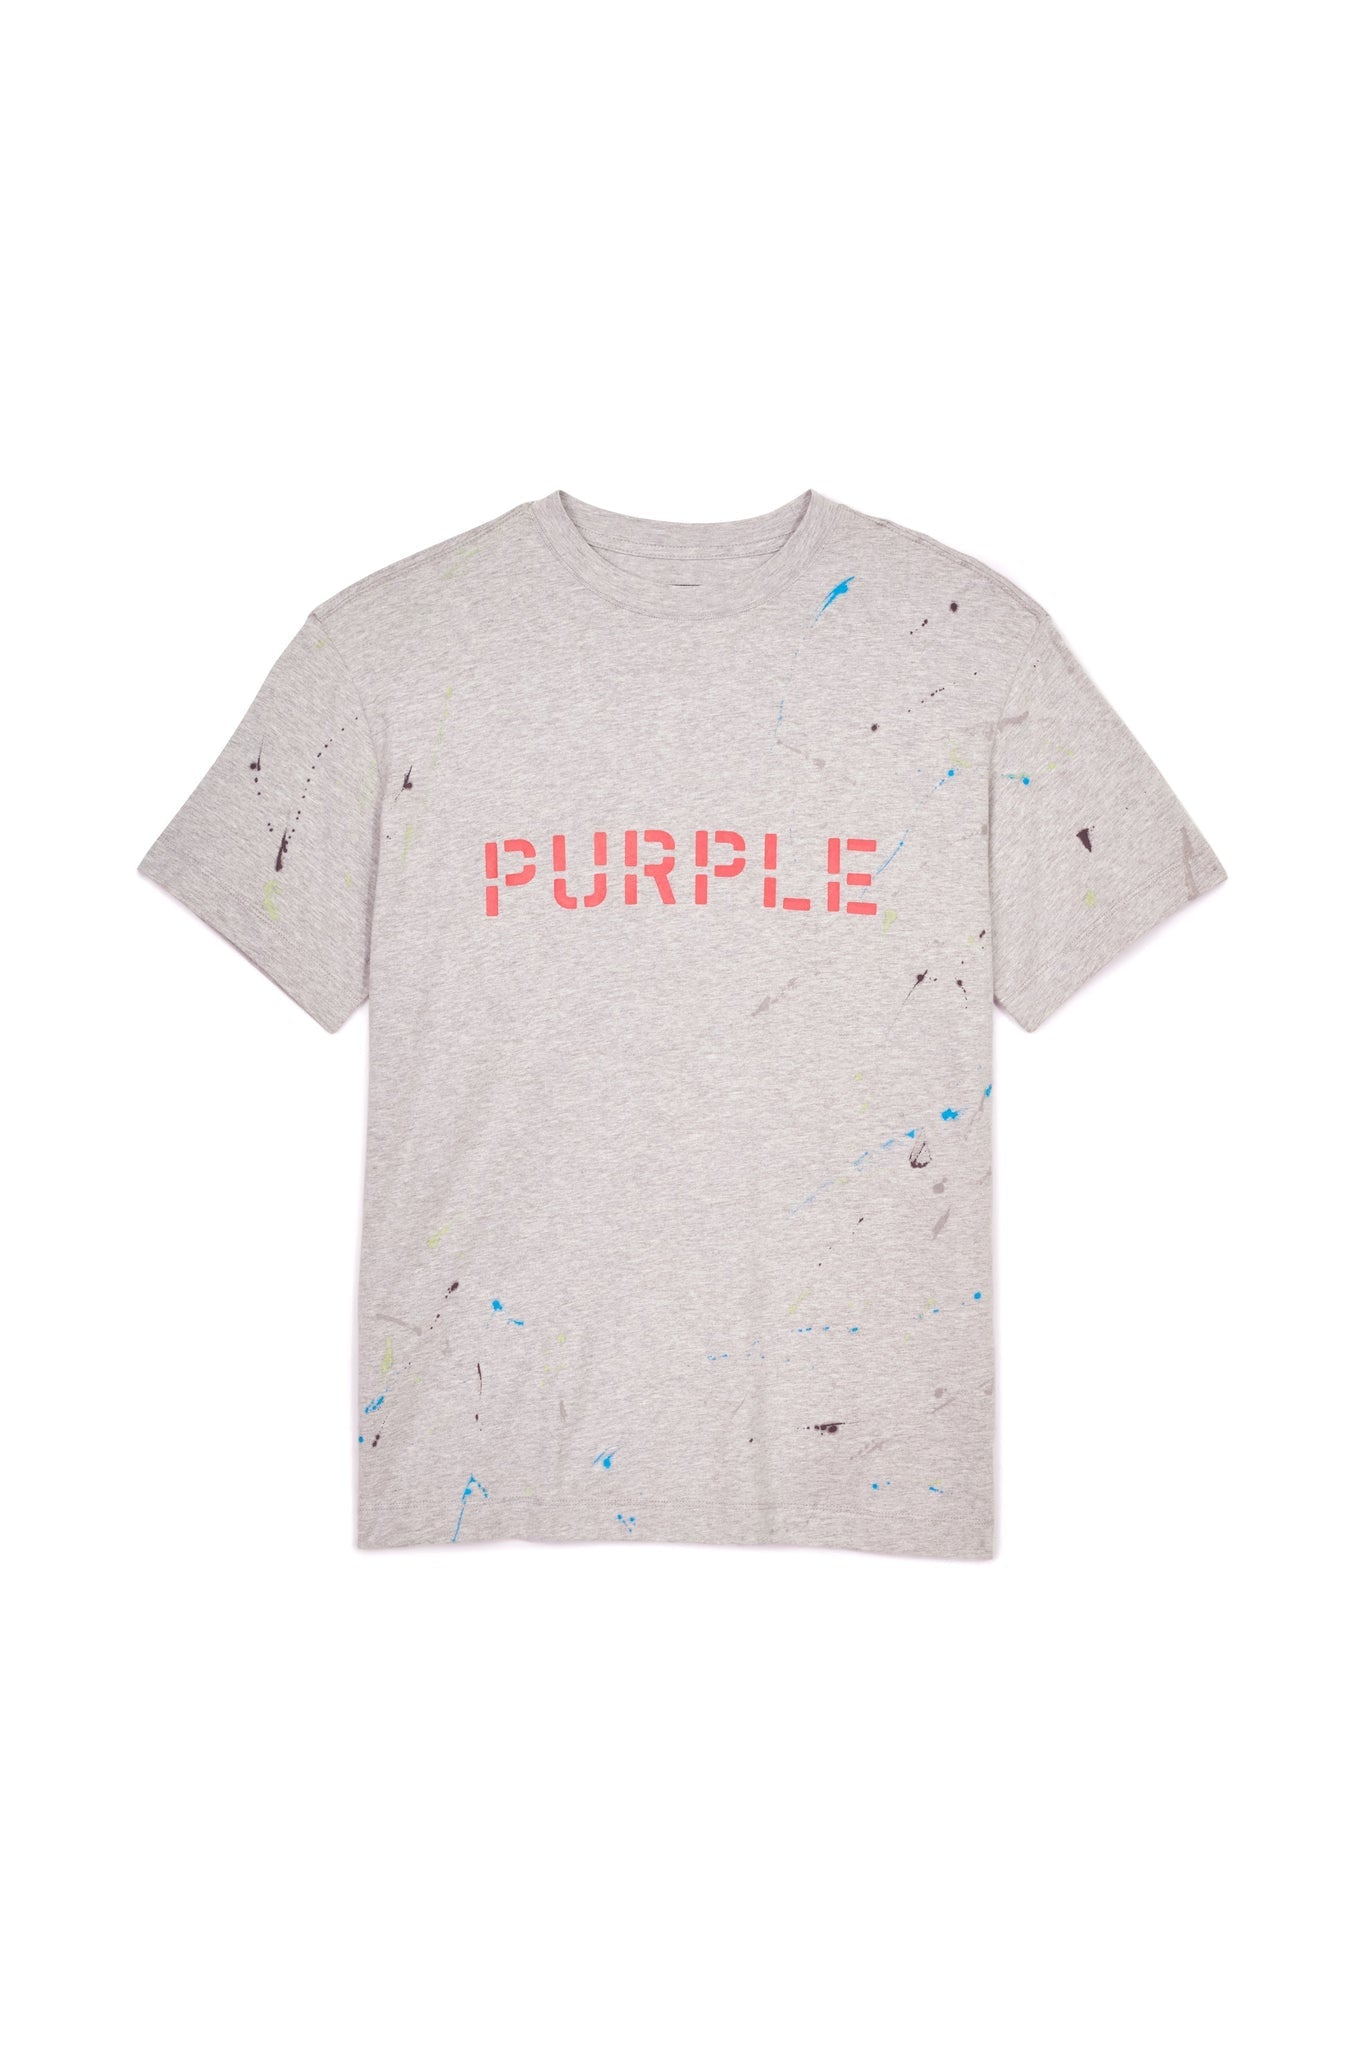 Purple brand jersey grey stencil paint